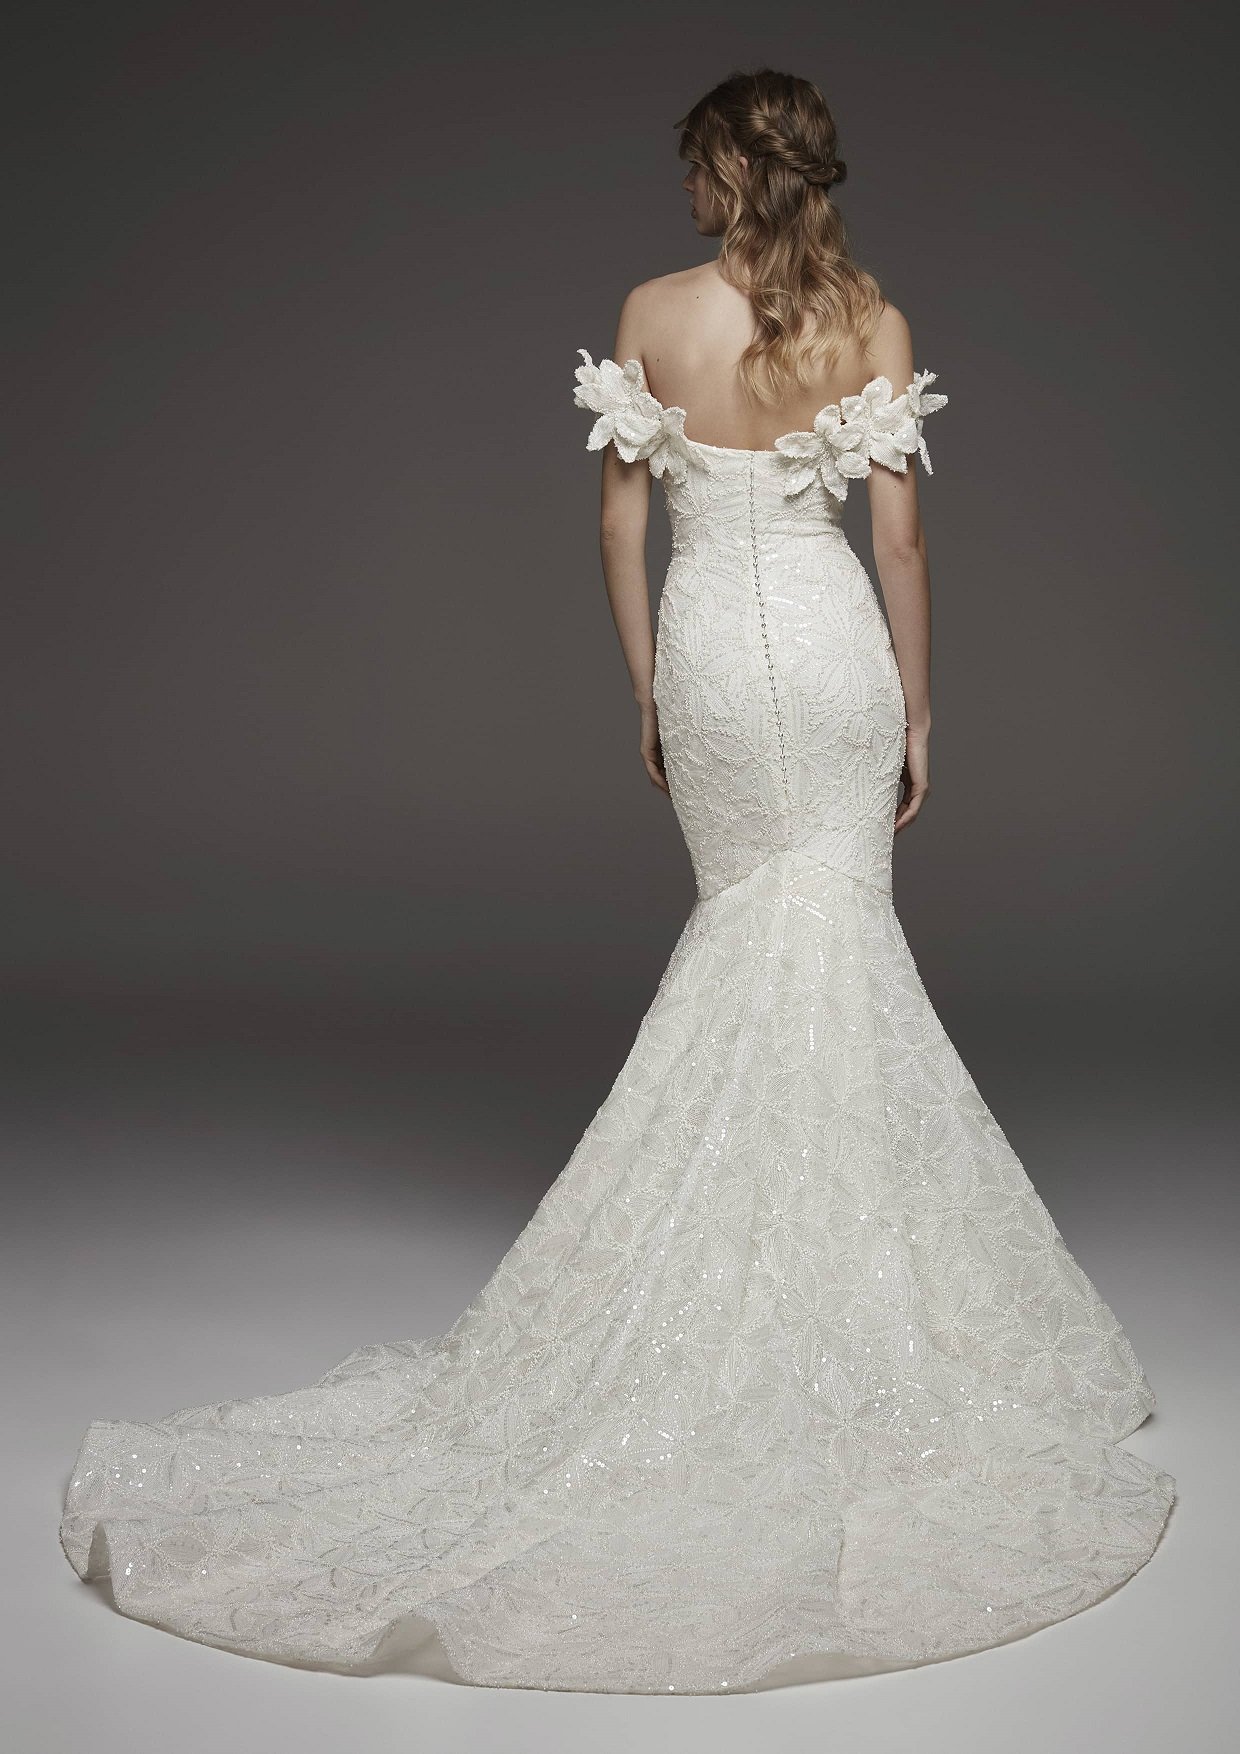 Stunning off-the-shoulder wedding gown Modes Bridal NZ